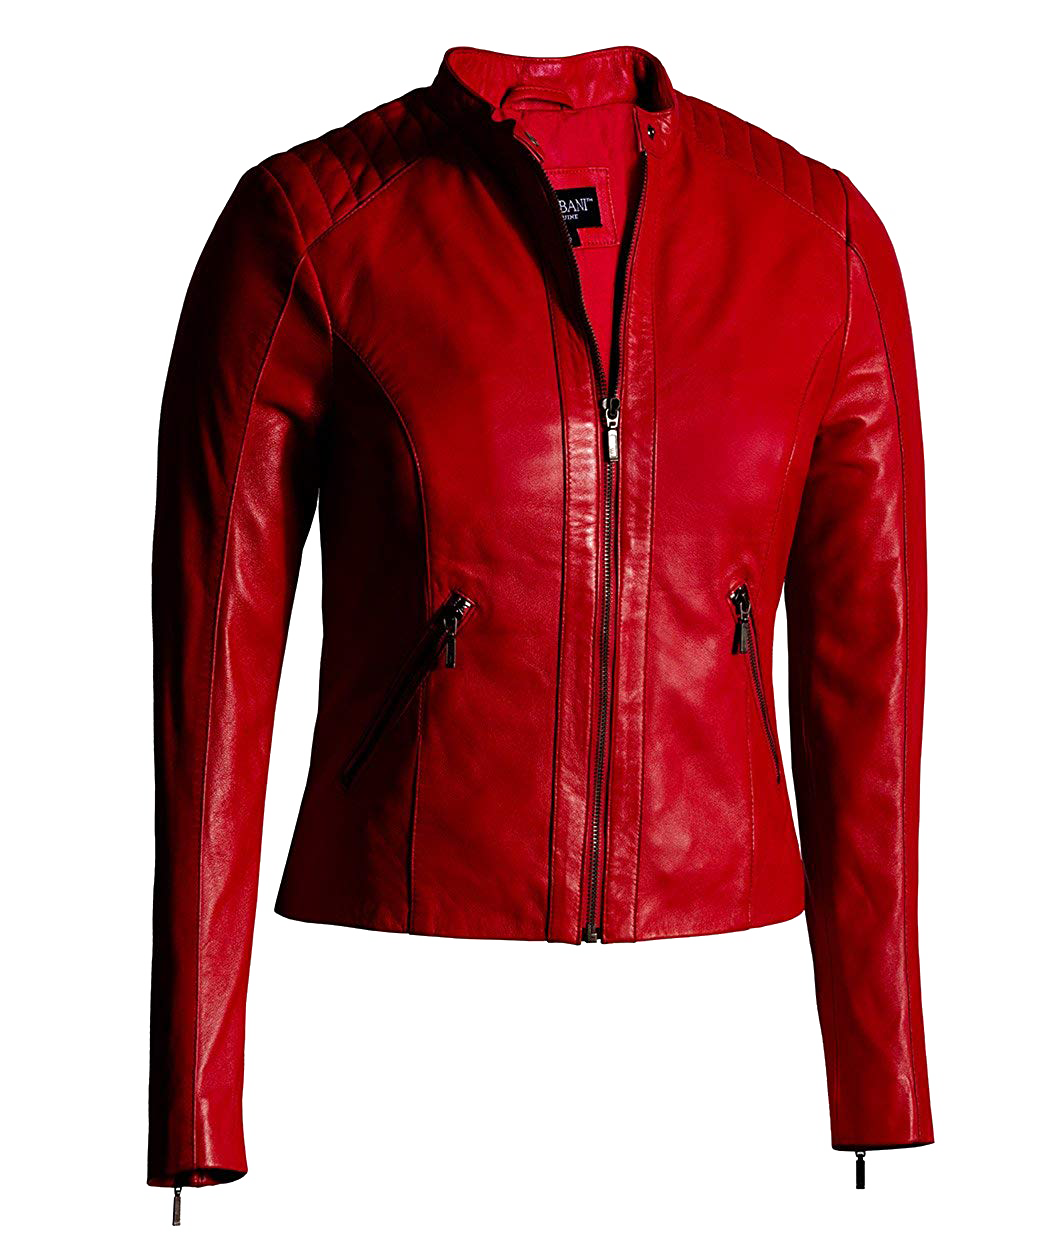 Leather Jacket Transparent Image